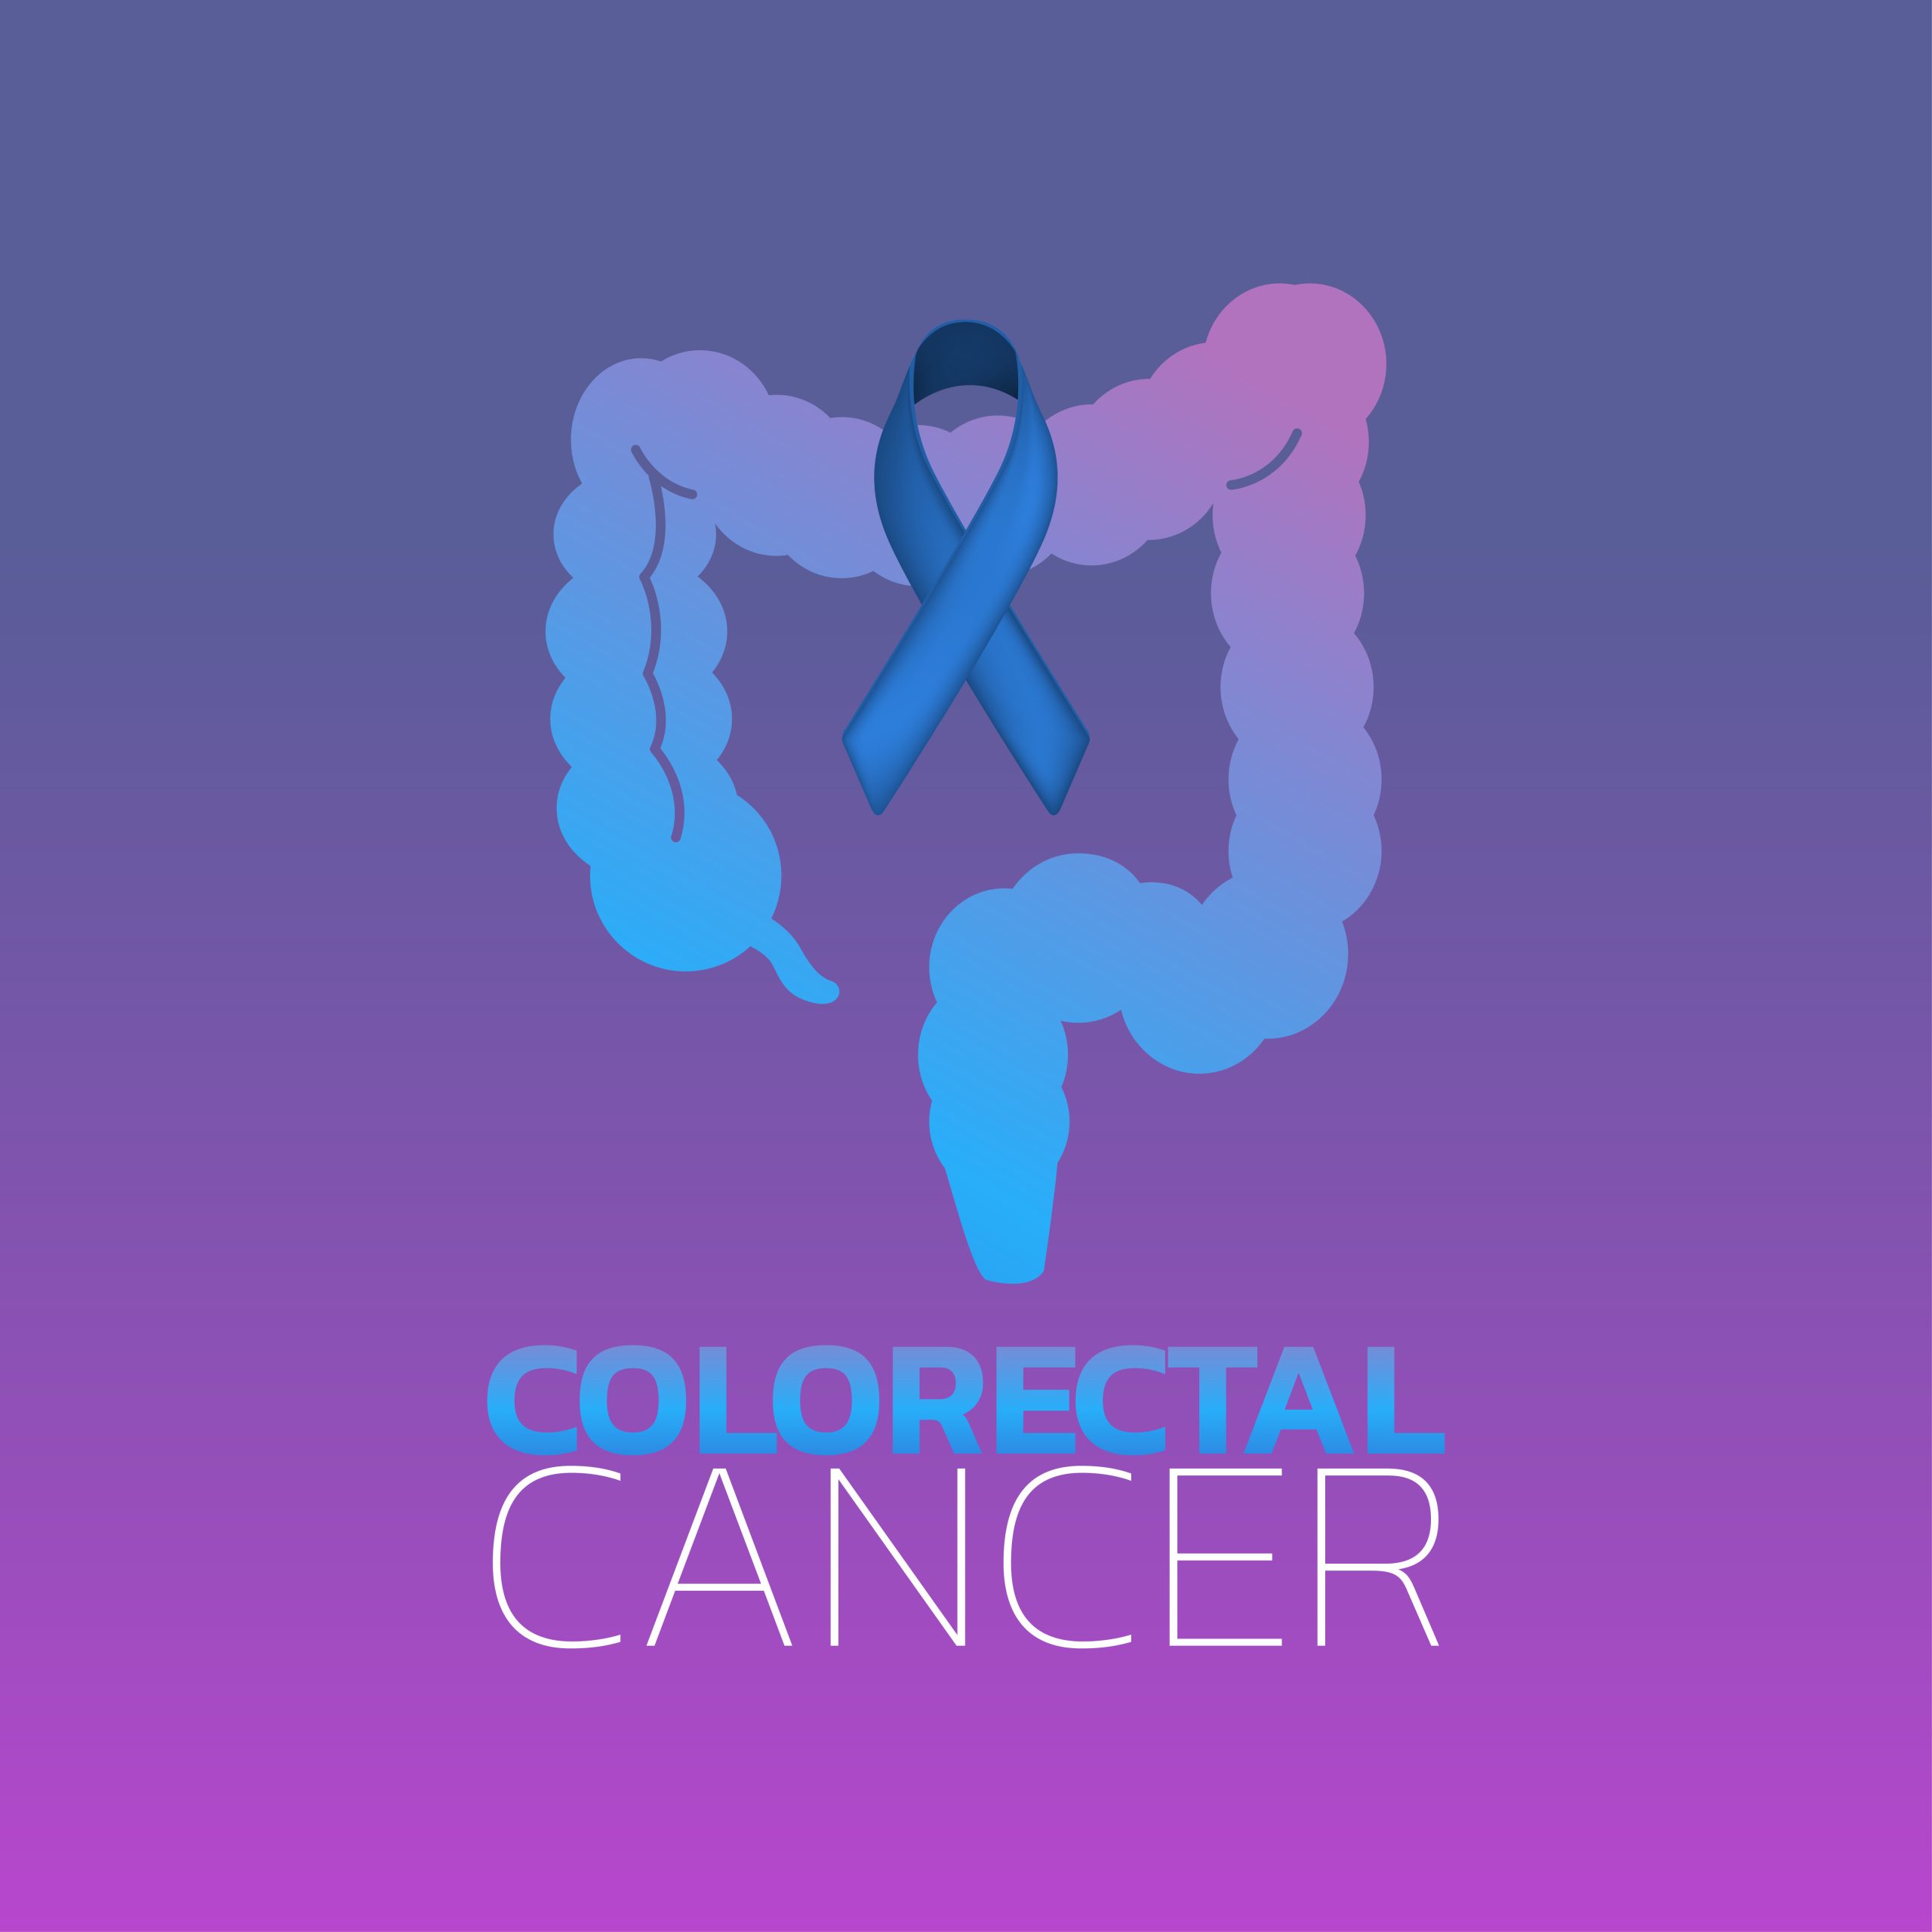 Colorectal Cancer icon design.